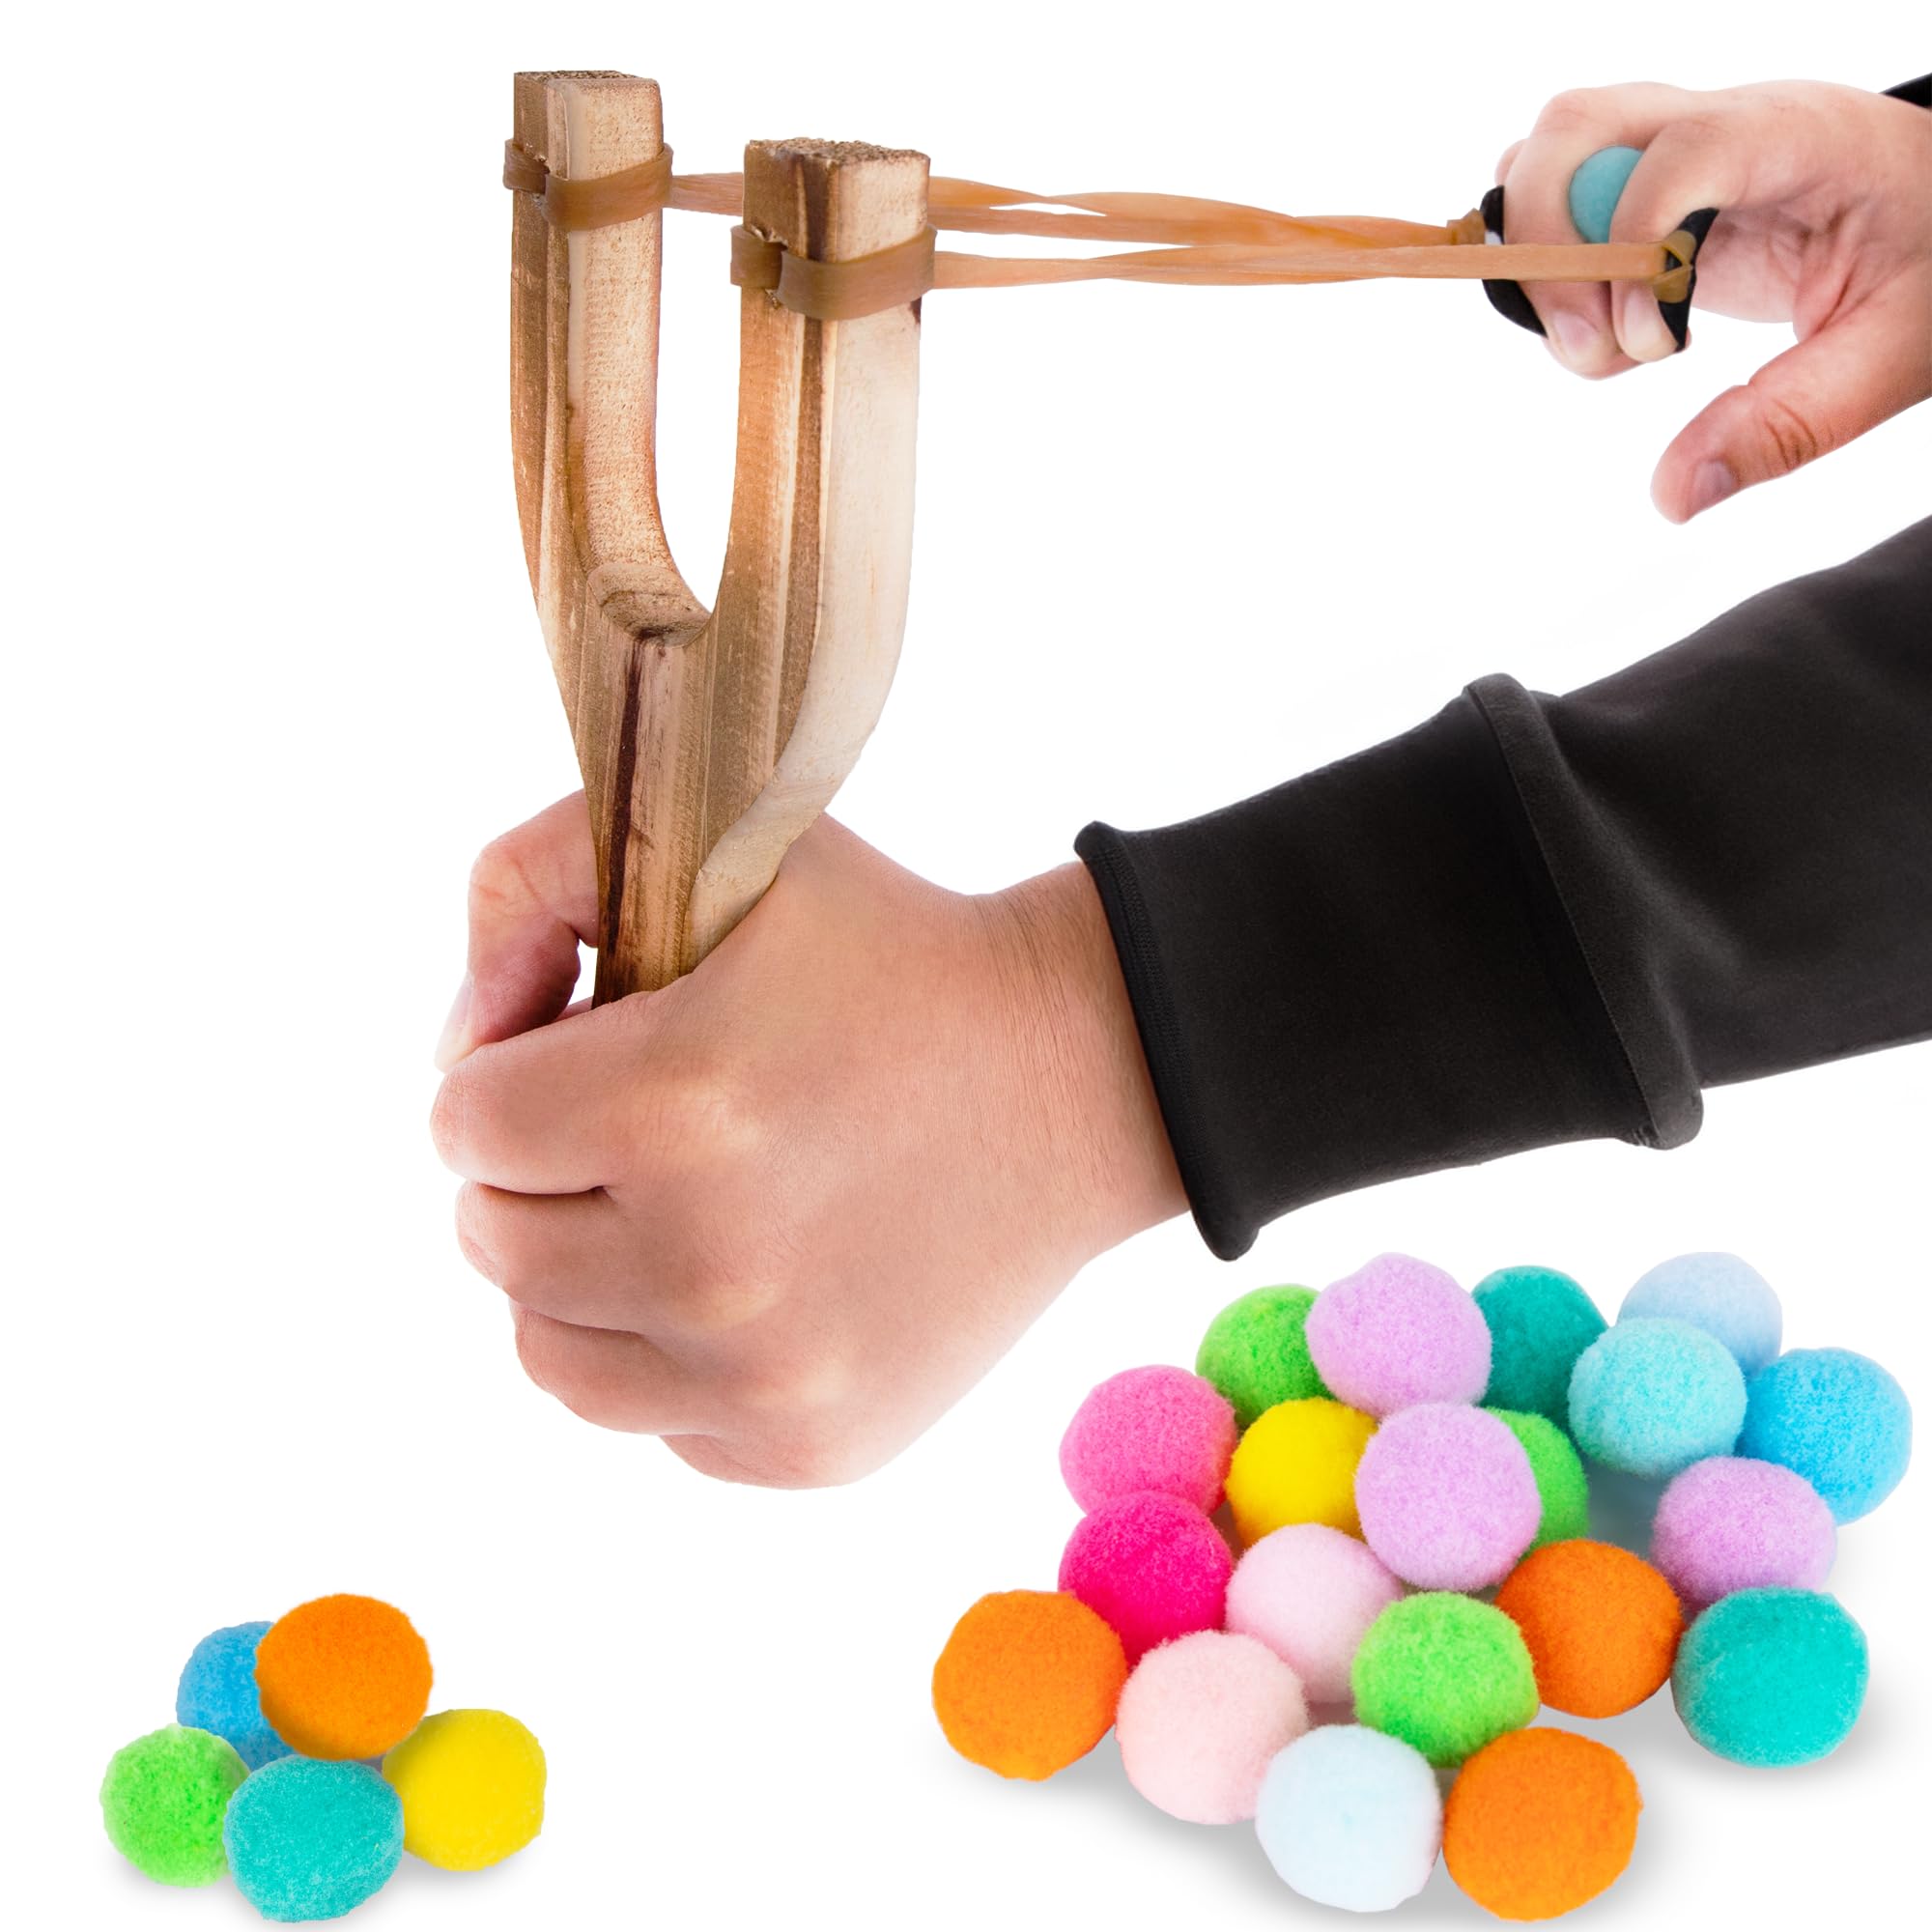 Wooden Toy Slingshot with 20 Cotton Balls - Wood Sling Shot for Kids - Shoots Balls Up to 10 Feet - Kids Slingshot with Soft Balls for Safe Play